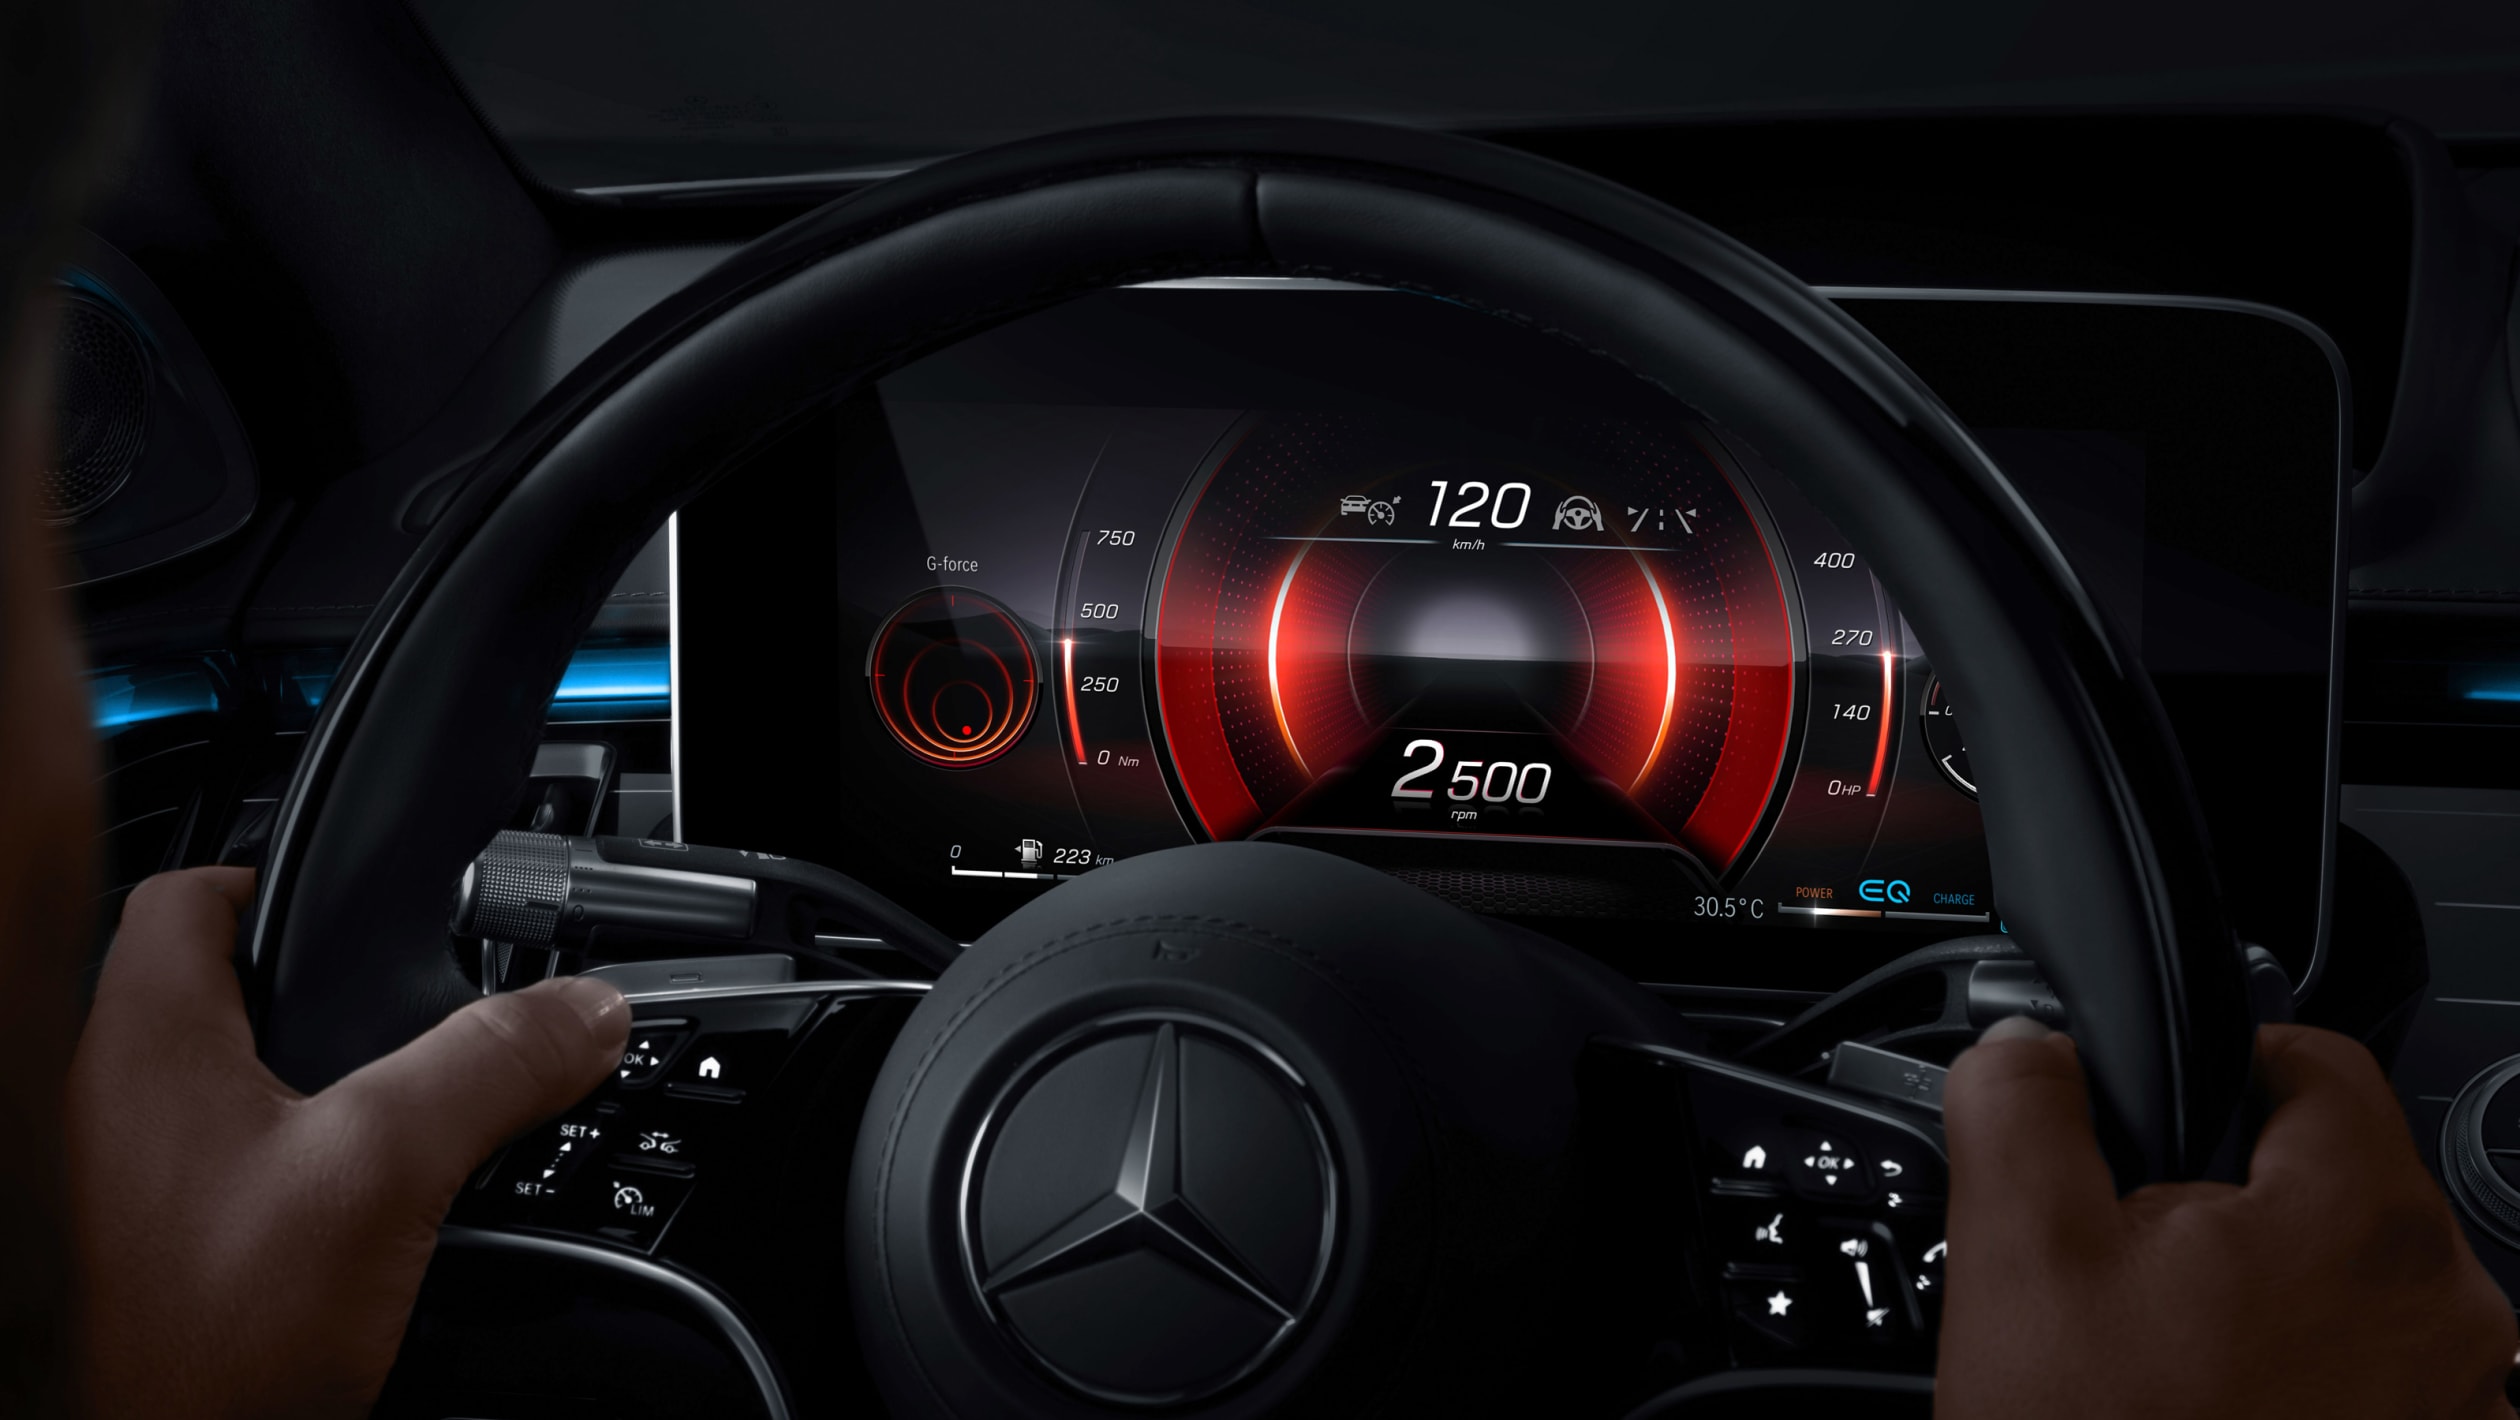 aria-label="Mercedes S Class 2020 interior technology 6"